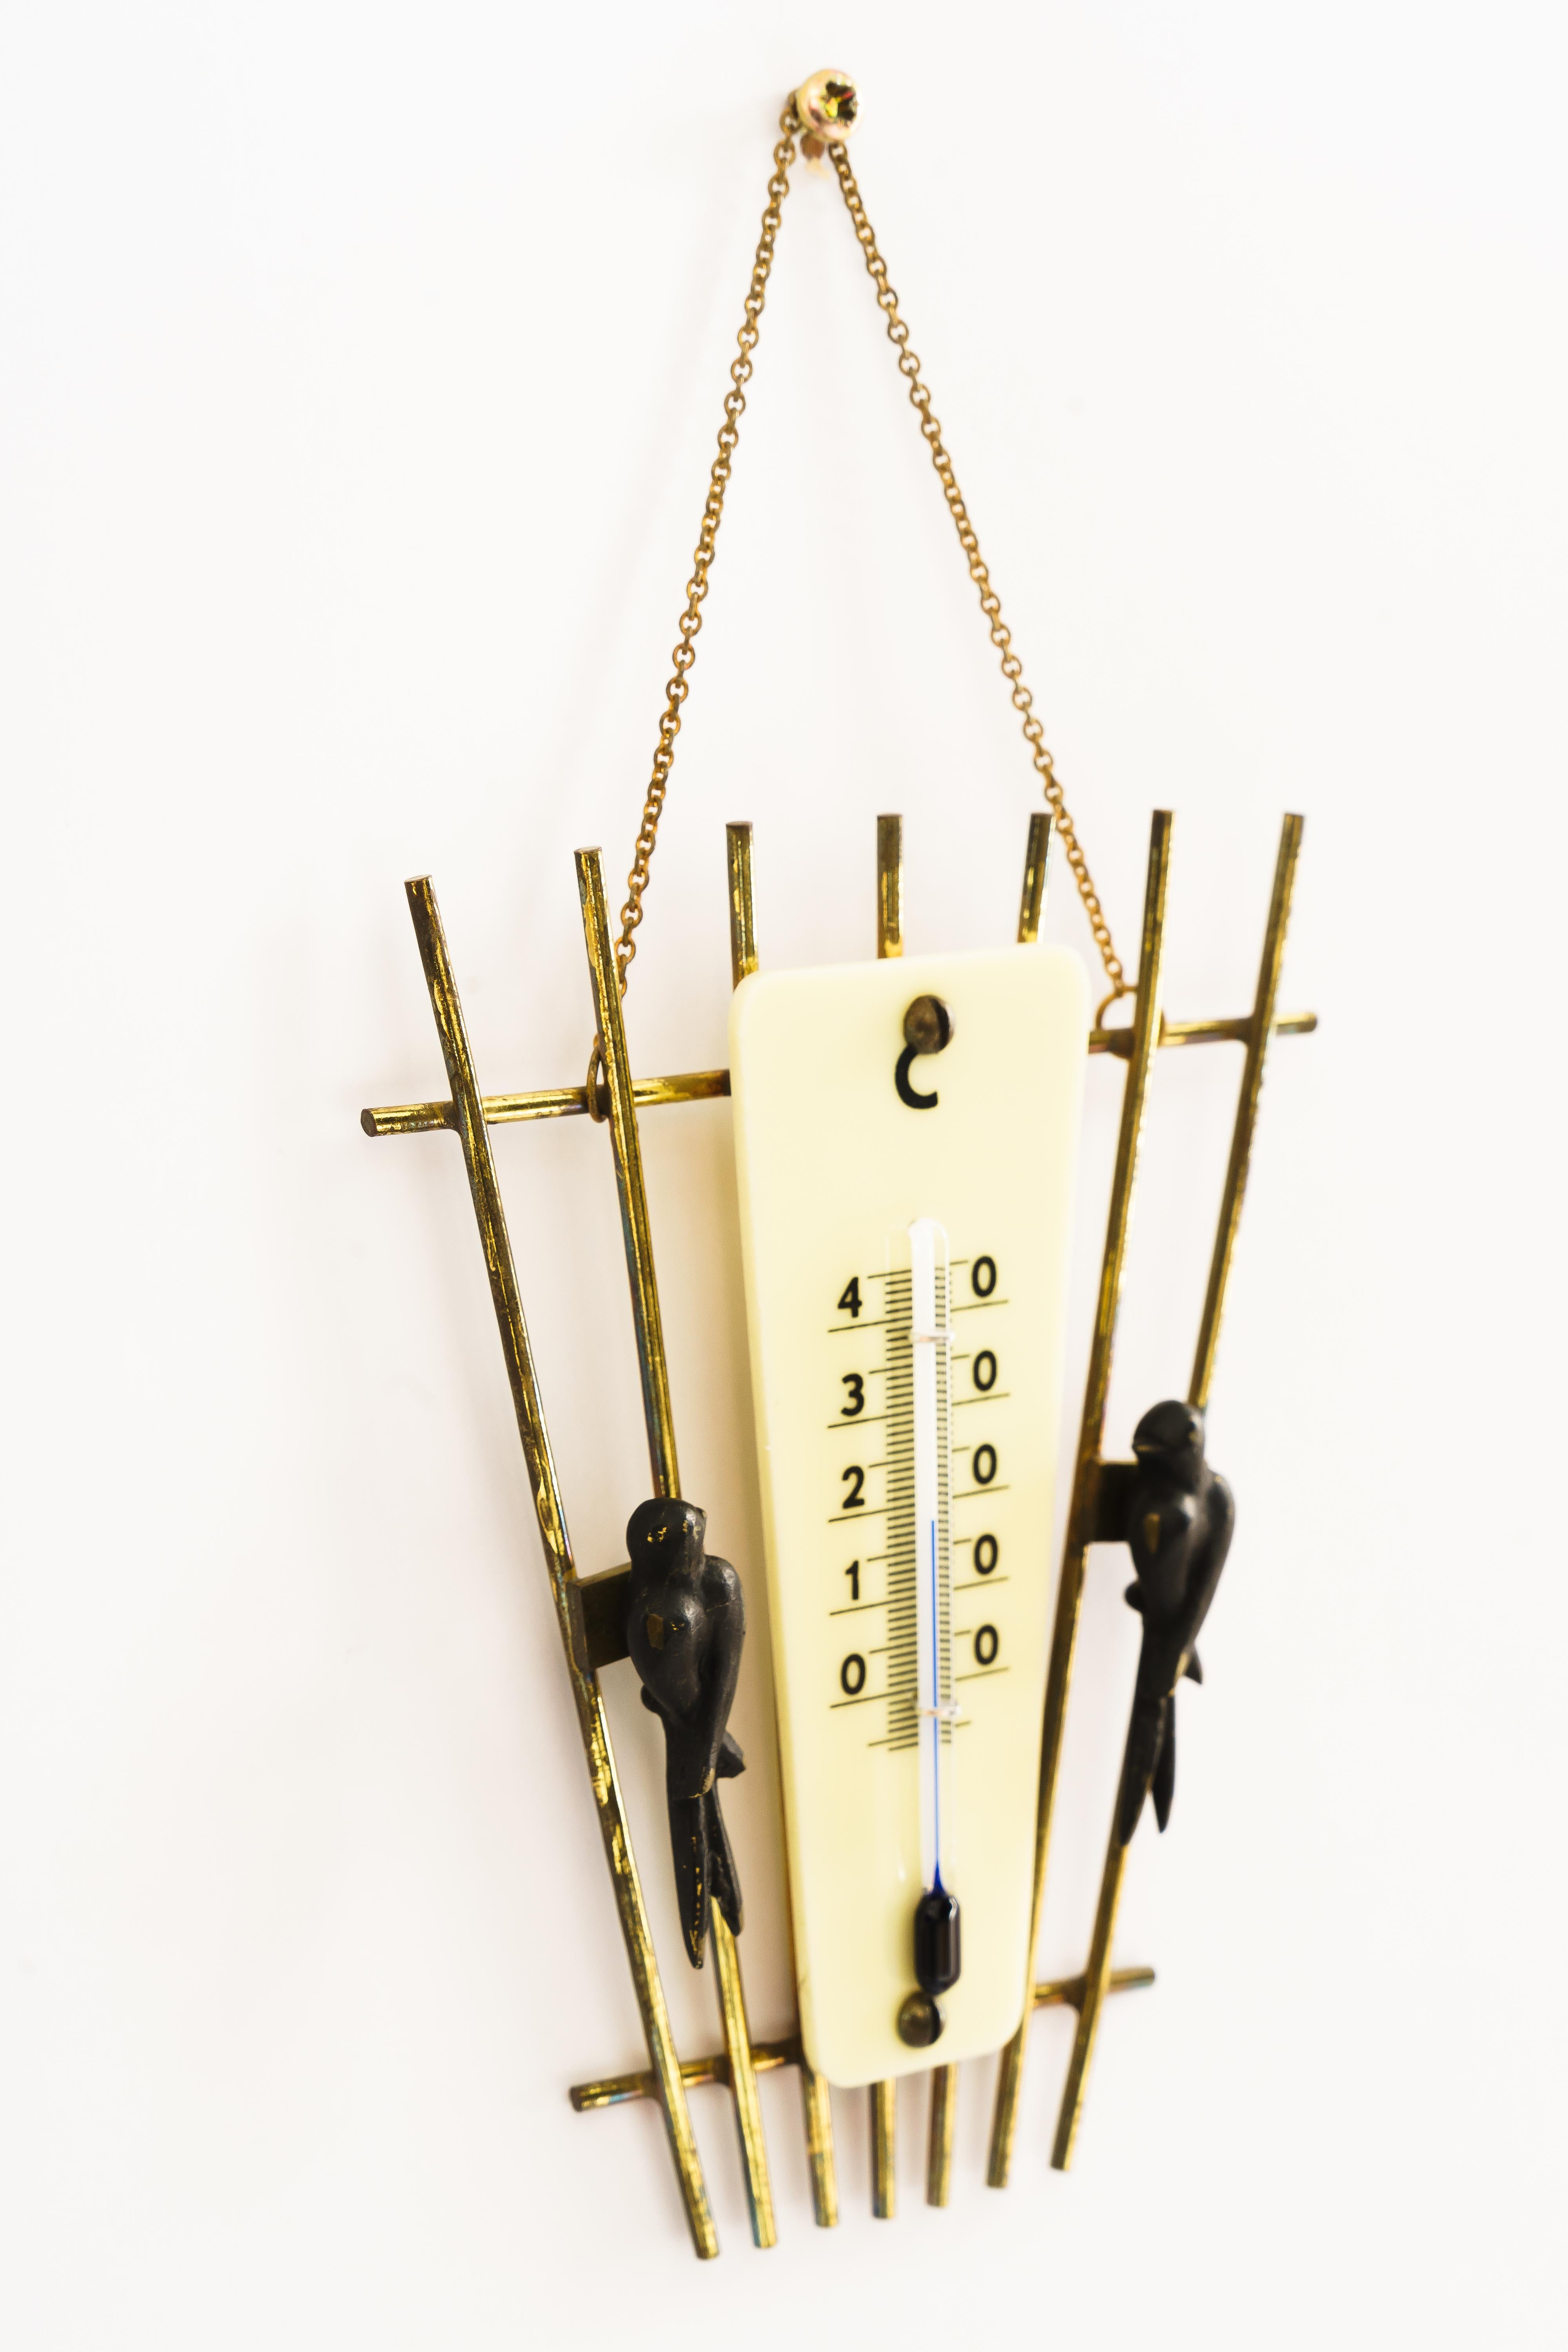 Walter Bosse Wall Thermometer, Vienna around 1950s
Original condition